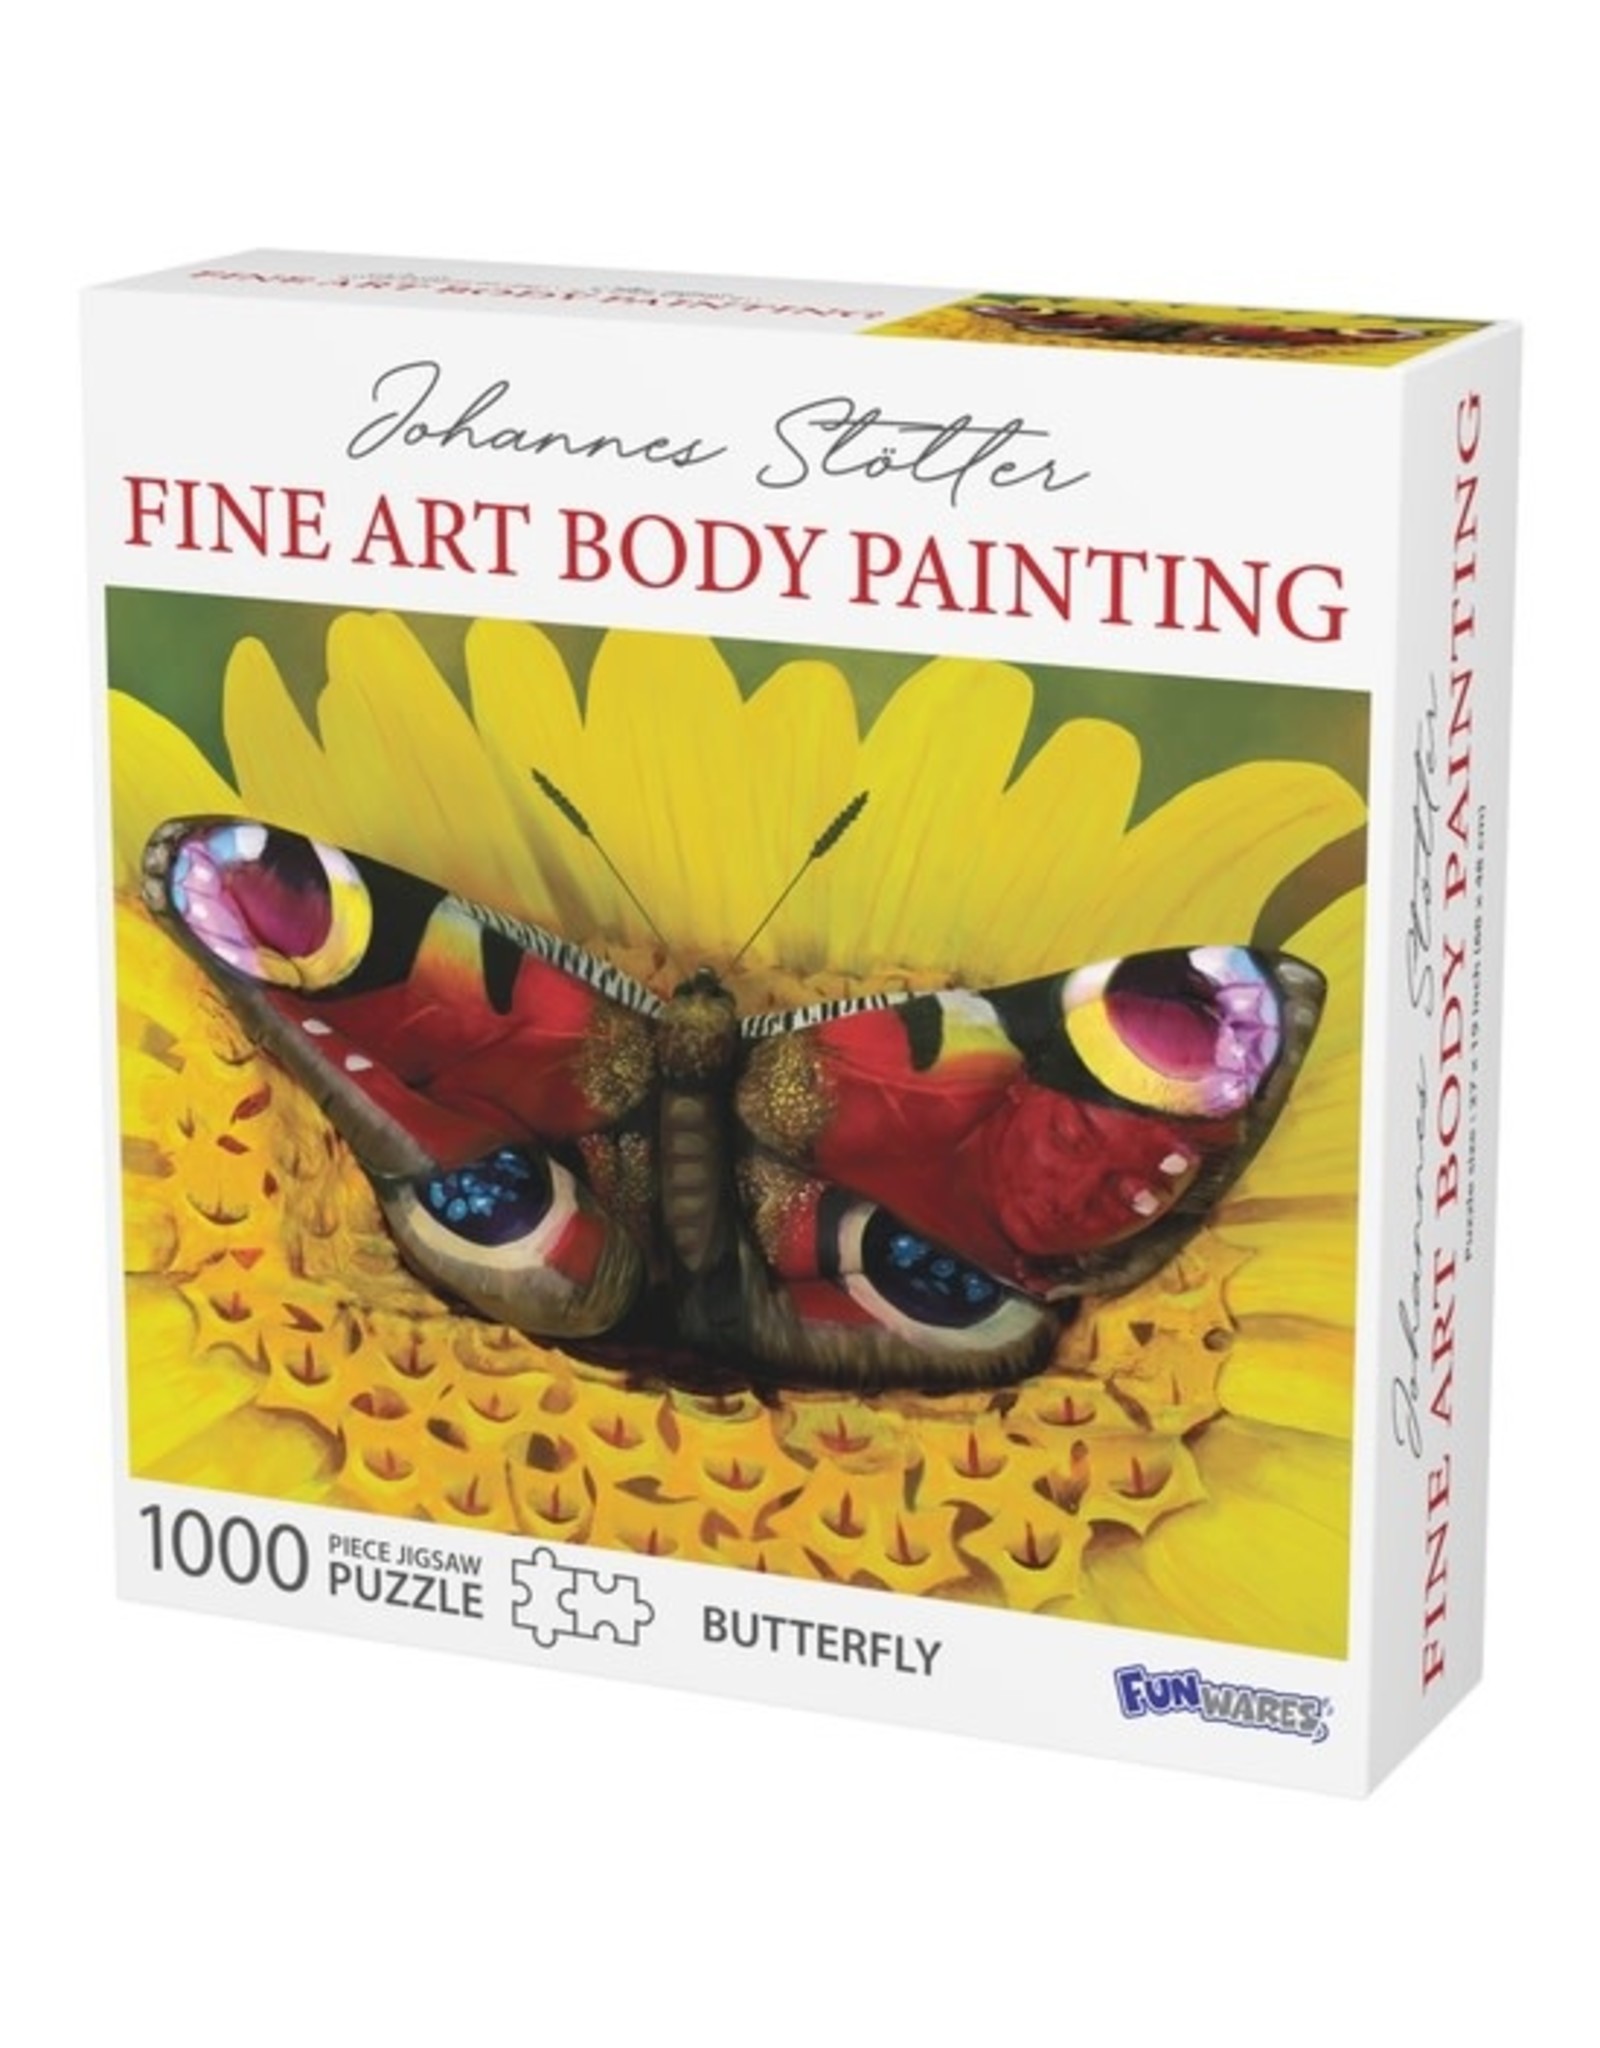 Johannes Stotter Butterfly Body Art 1000 pc